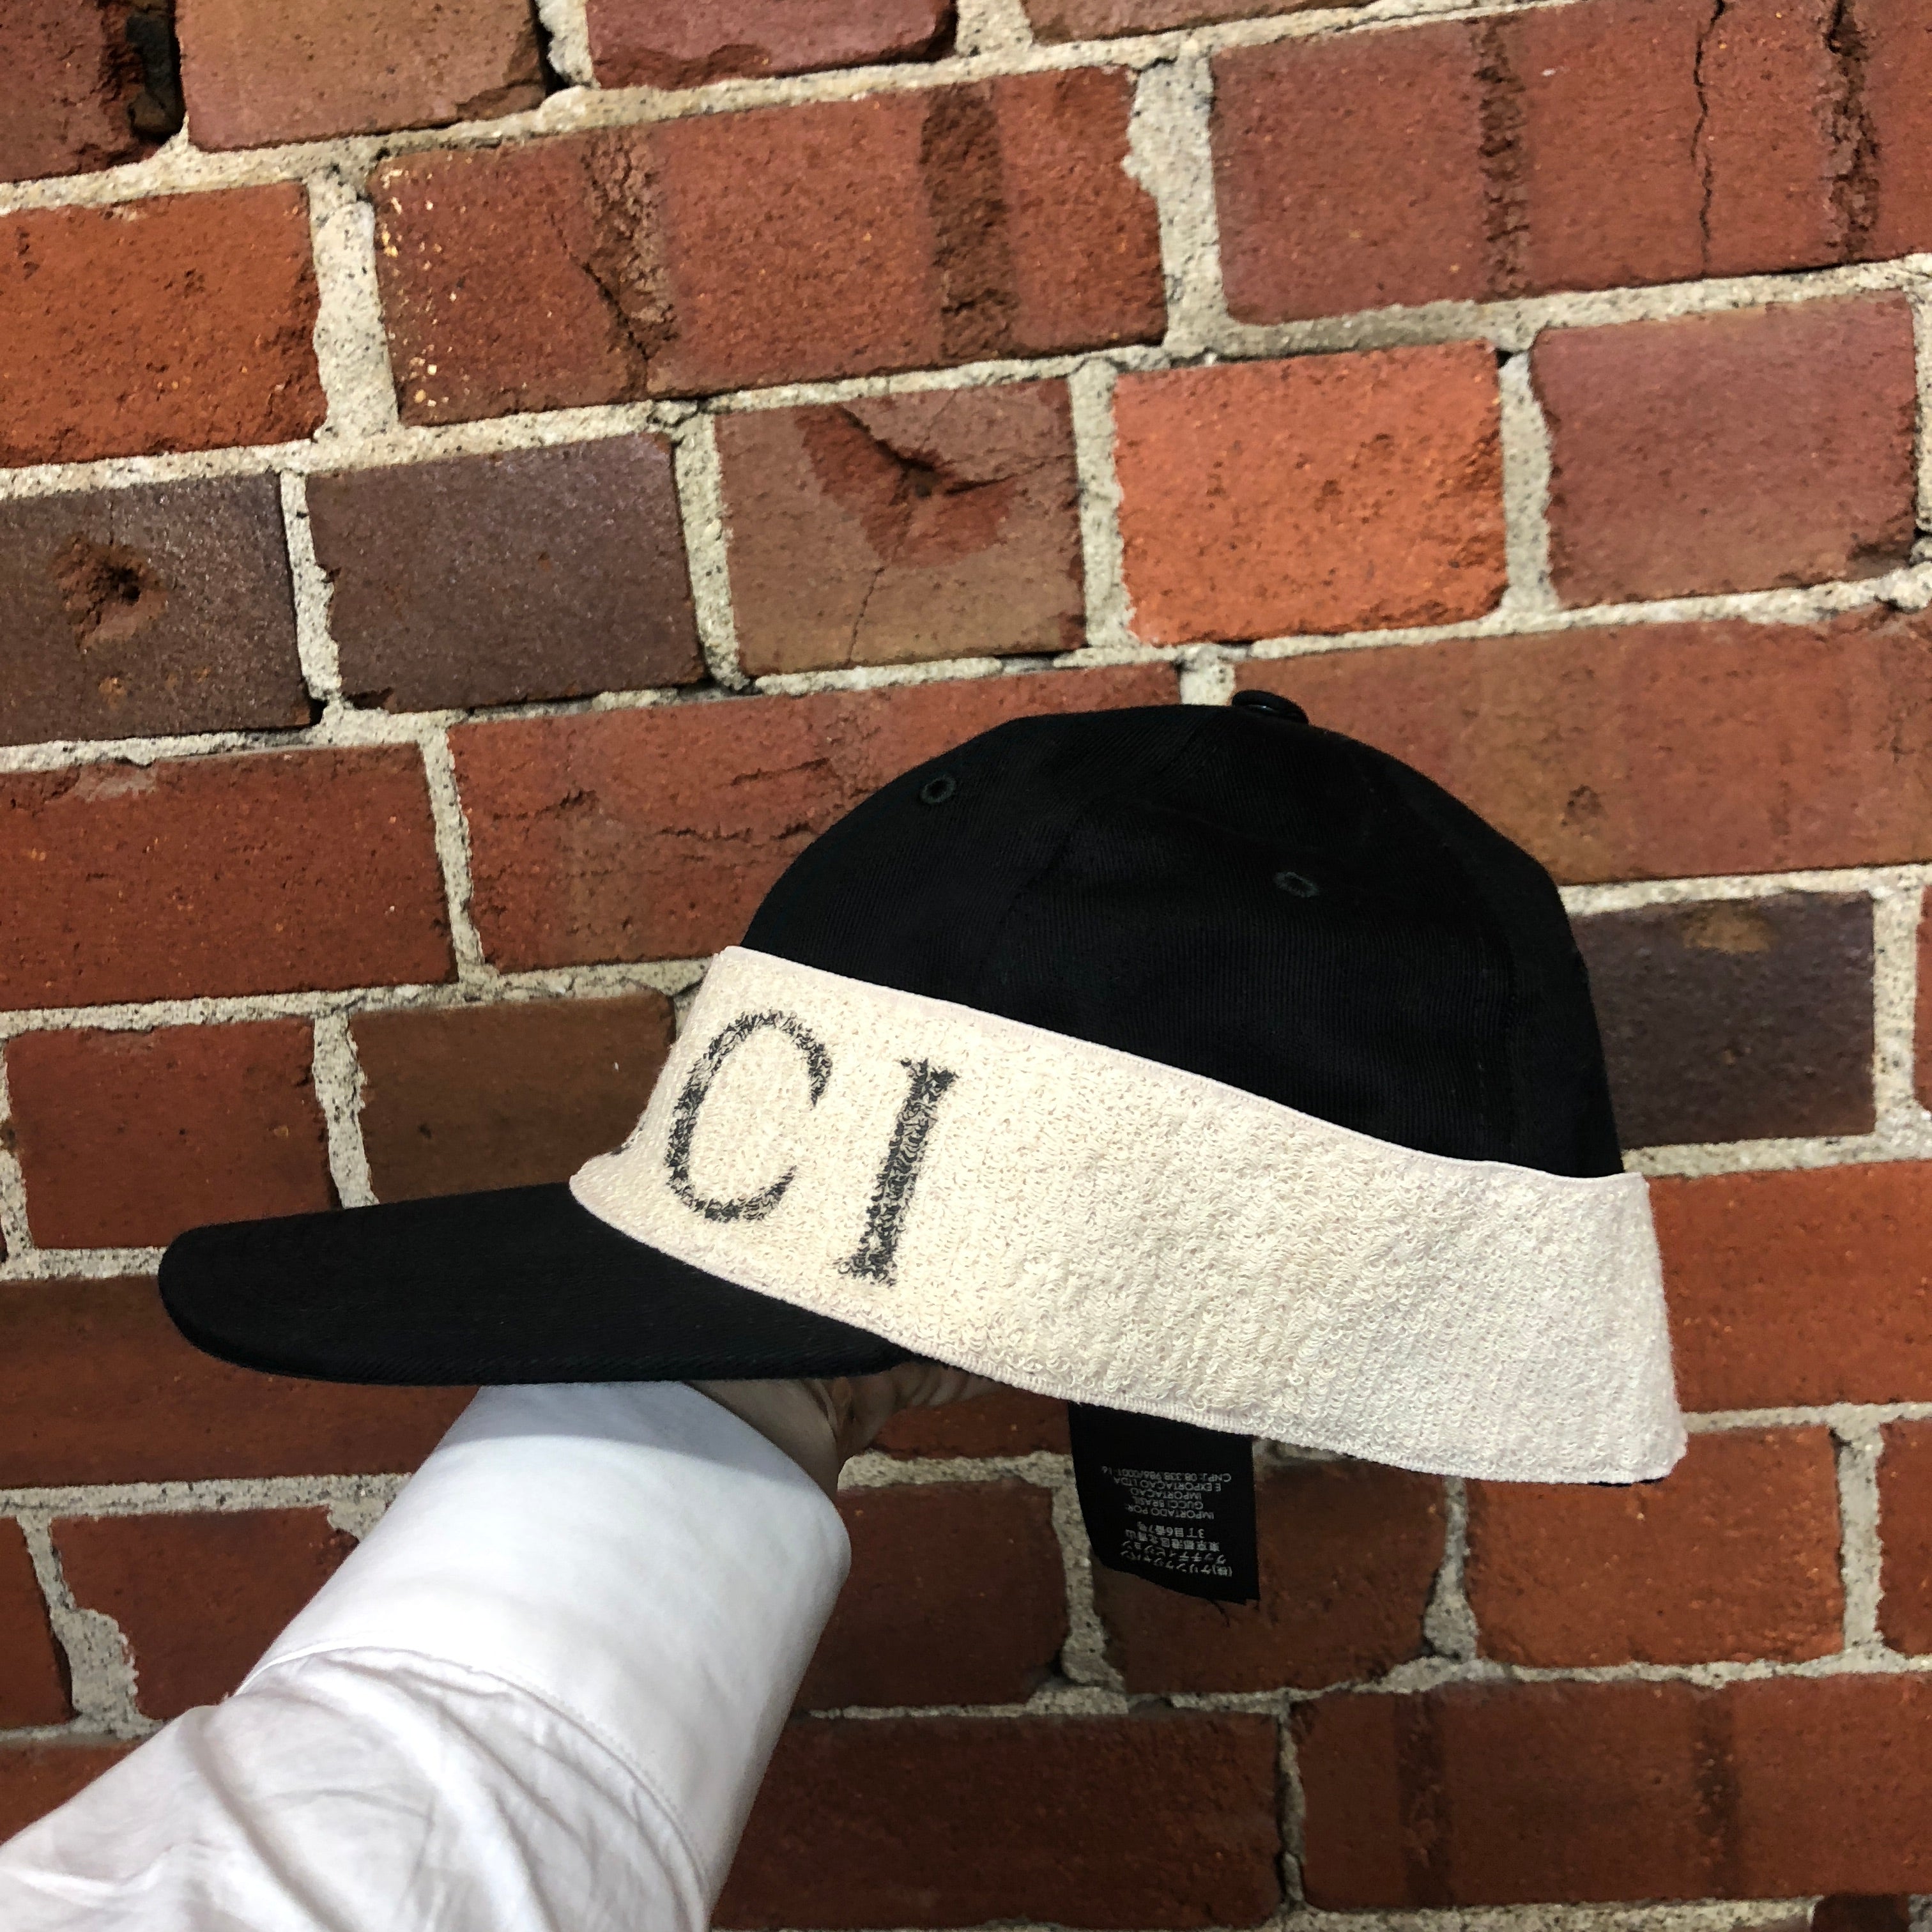 GUCCI Baseball hat with Gucci headband